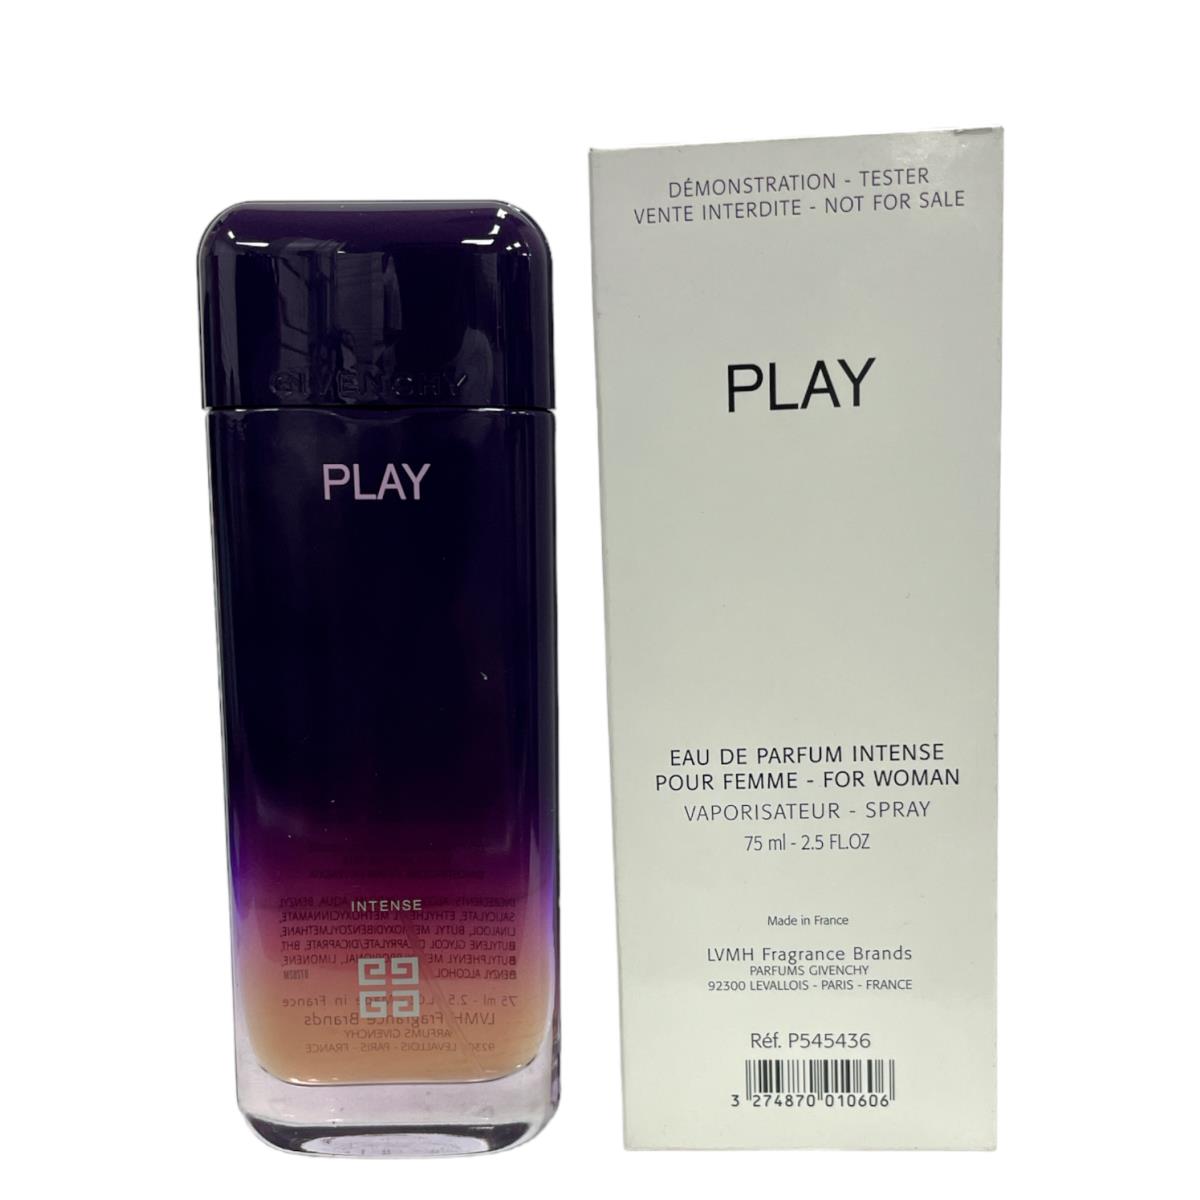 Givenchy Play Eau De Parfum Intense 75ml/2.5fl As Seen In Pictures